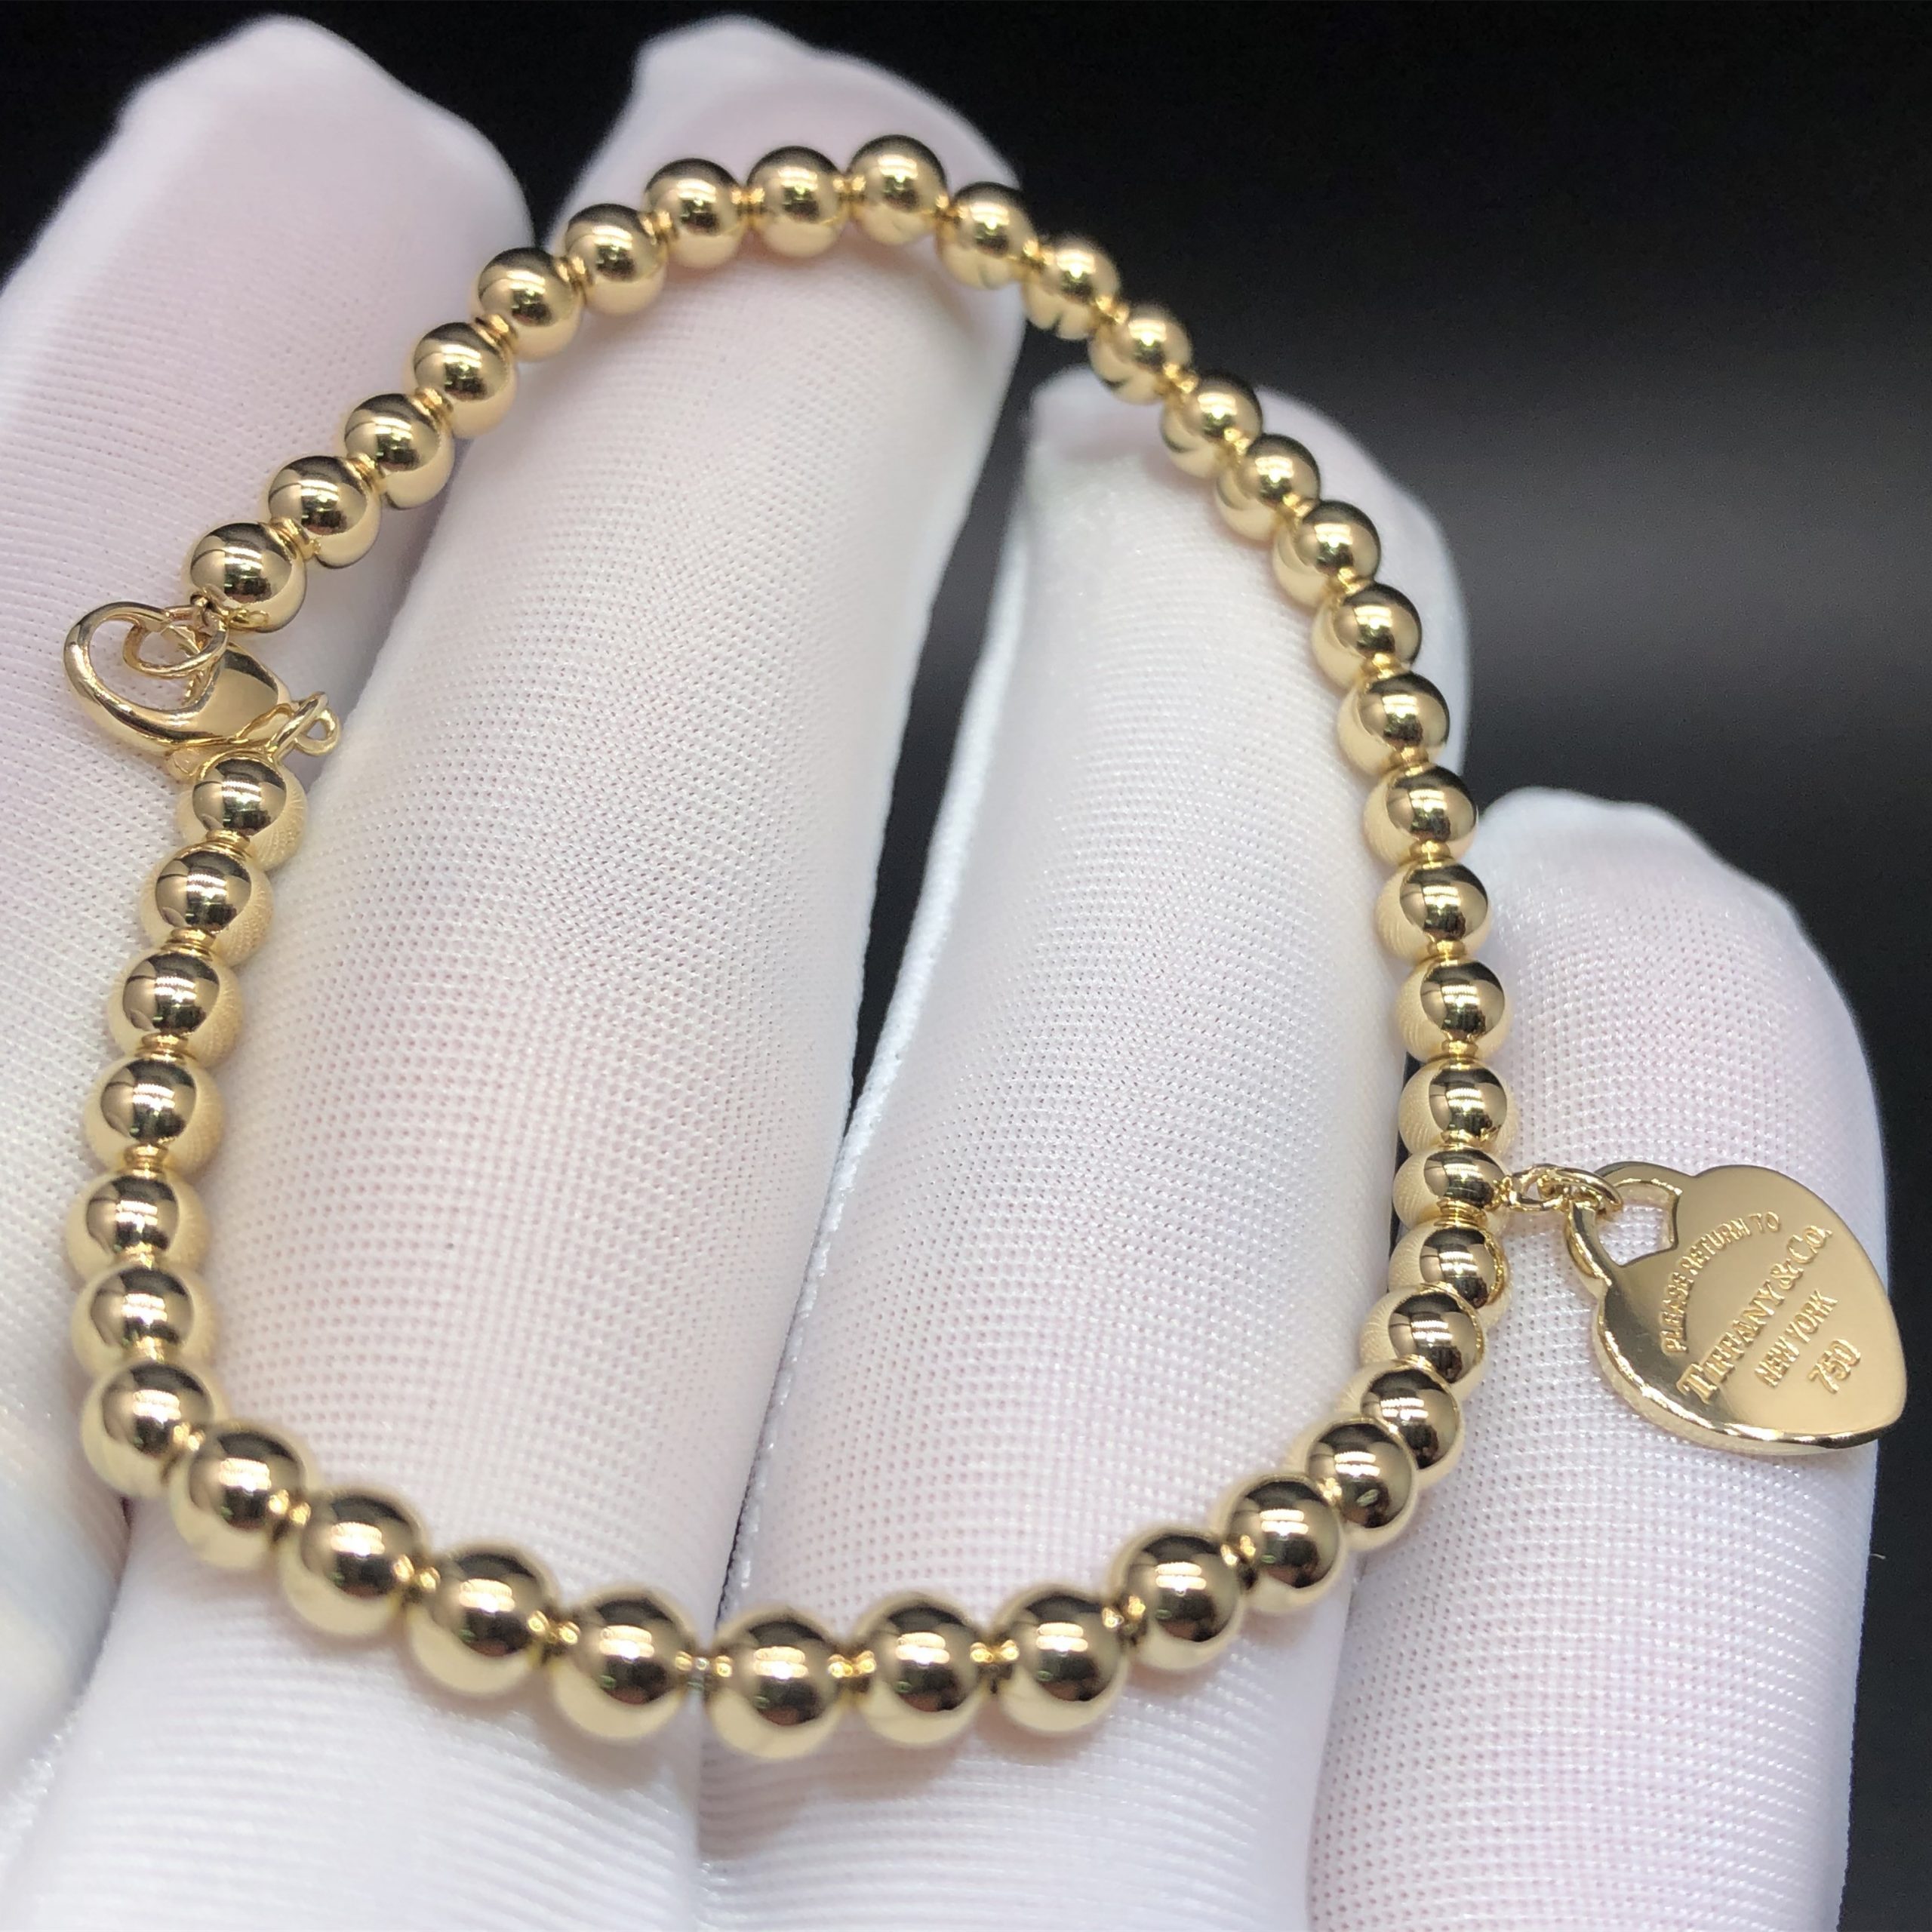 Return to Tiffany Heart Tag Bracelet en perles sur mesure en or jaune 18 carats